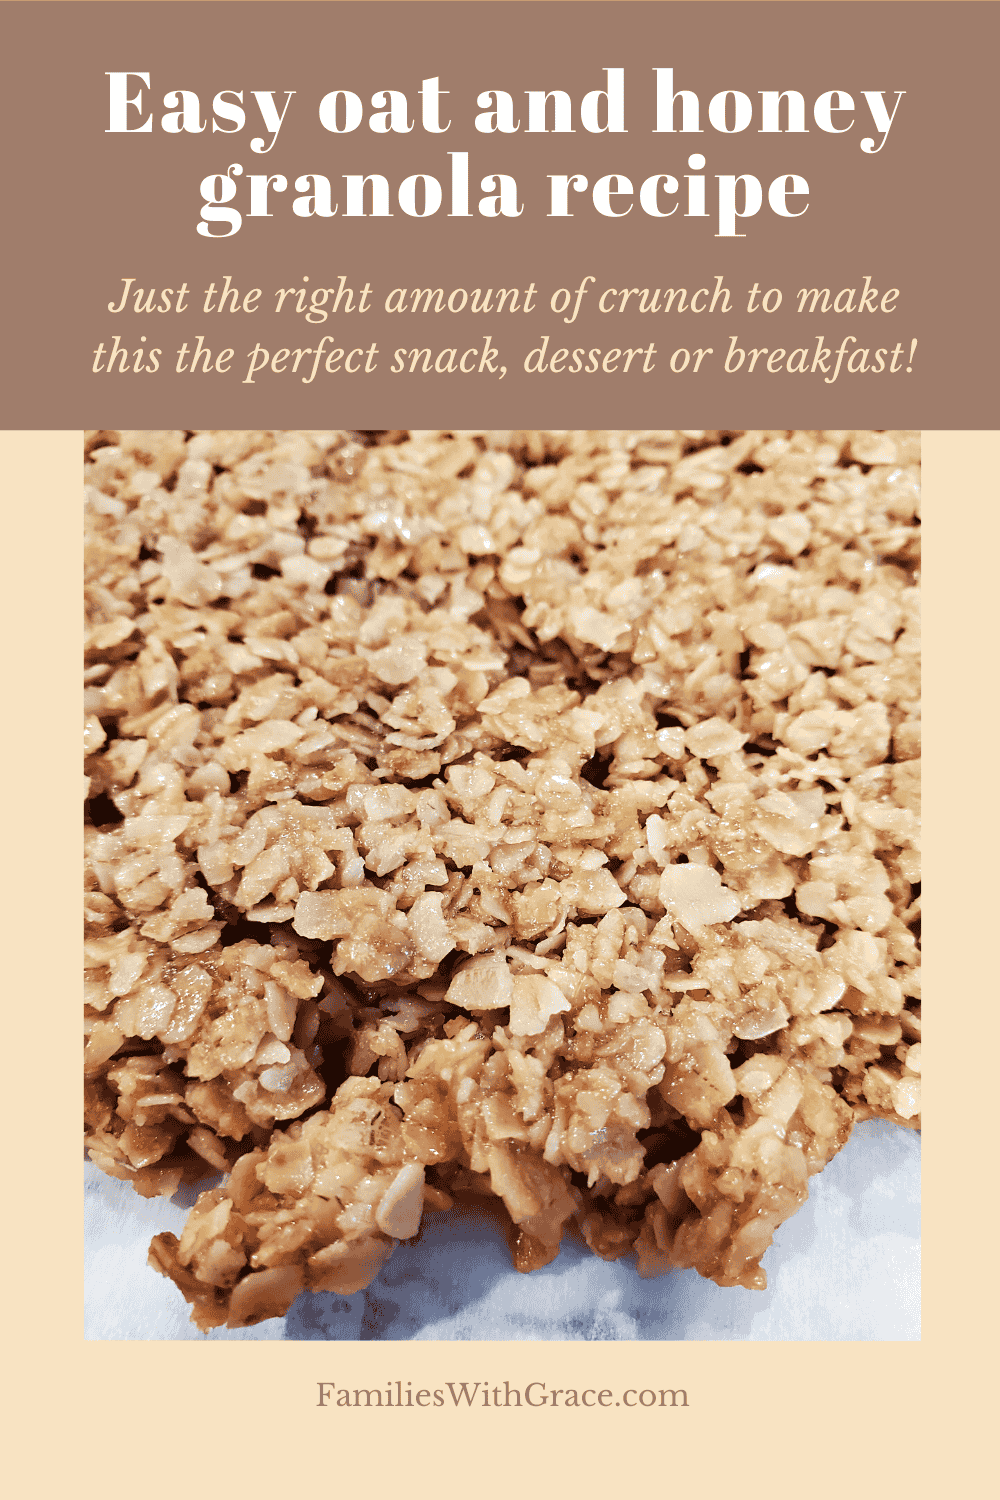 Easy oat and honey granola recipe Pinterest image